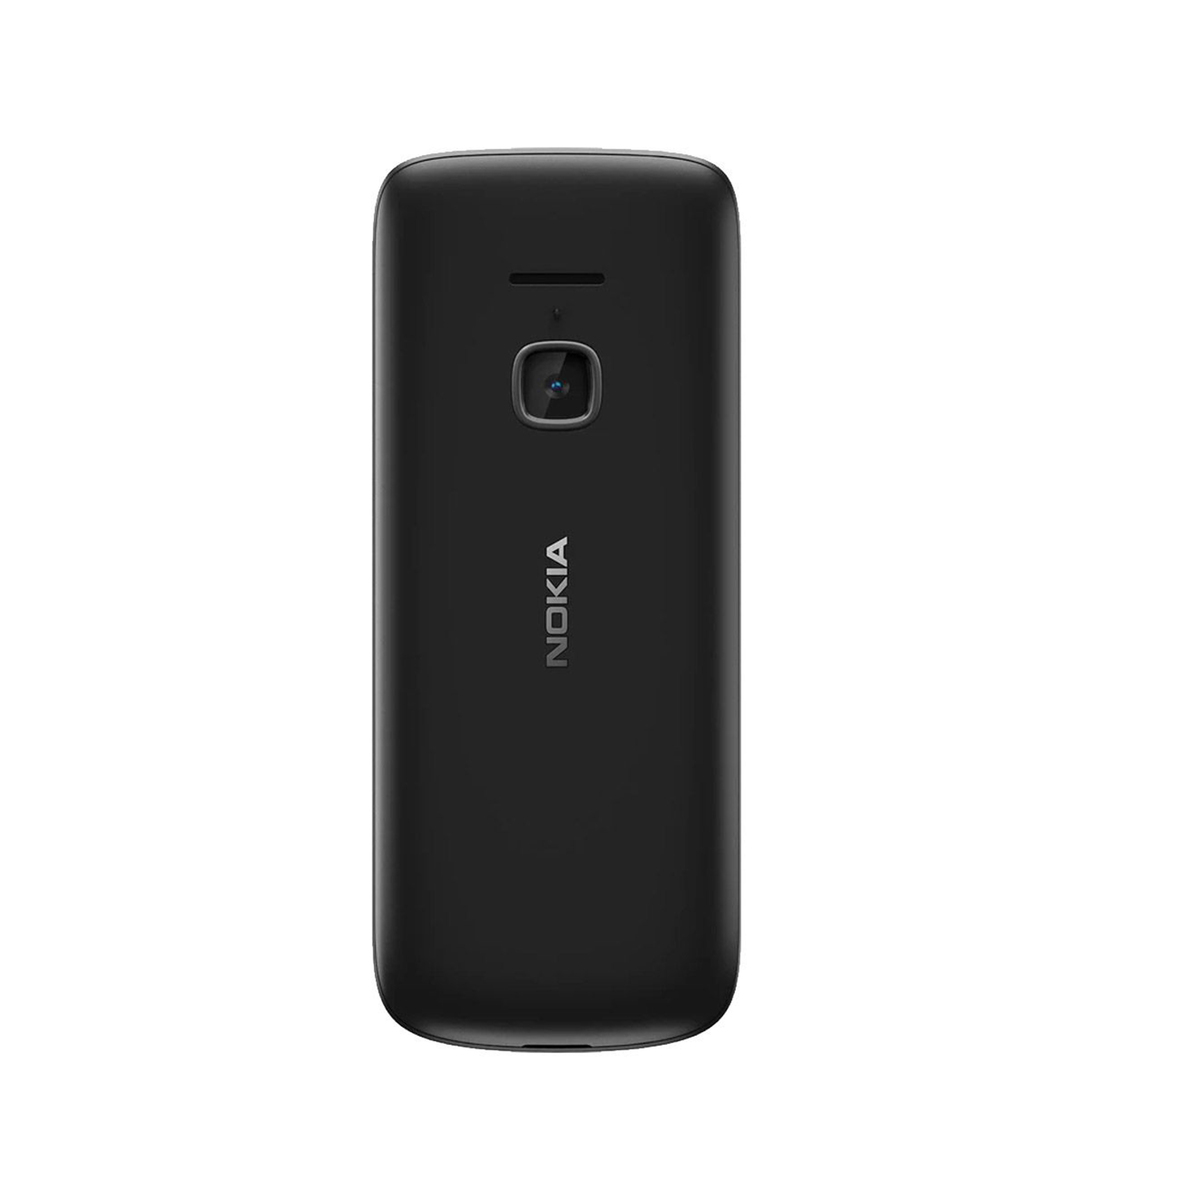 Nokia 225 - TA1279 Dual SIM 4G Black